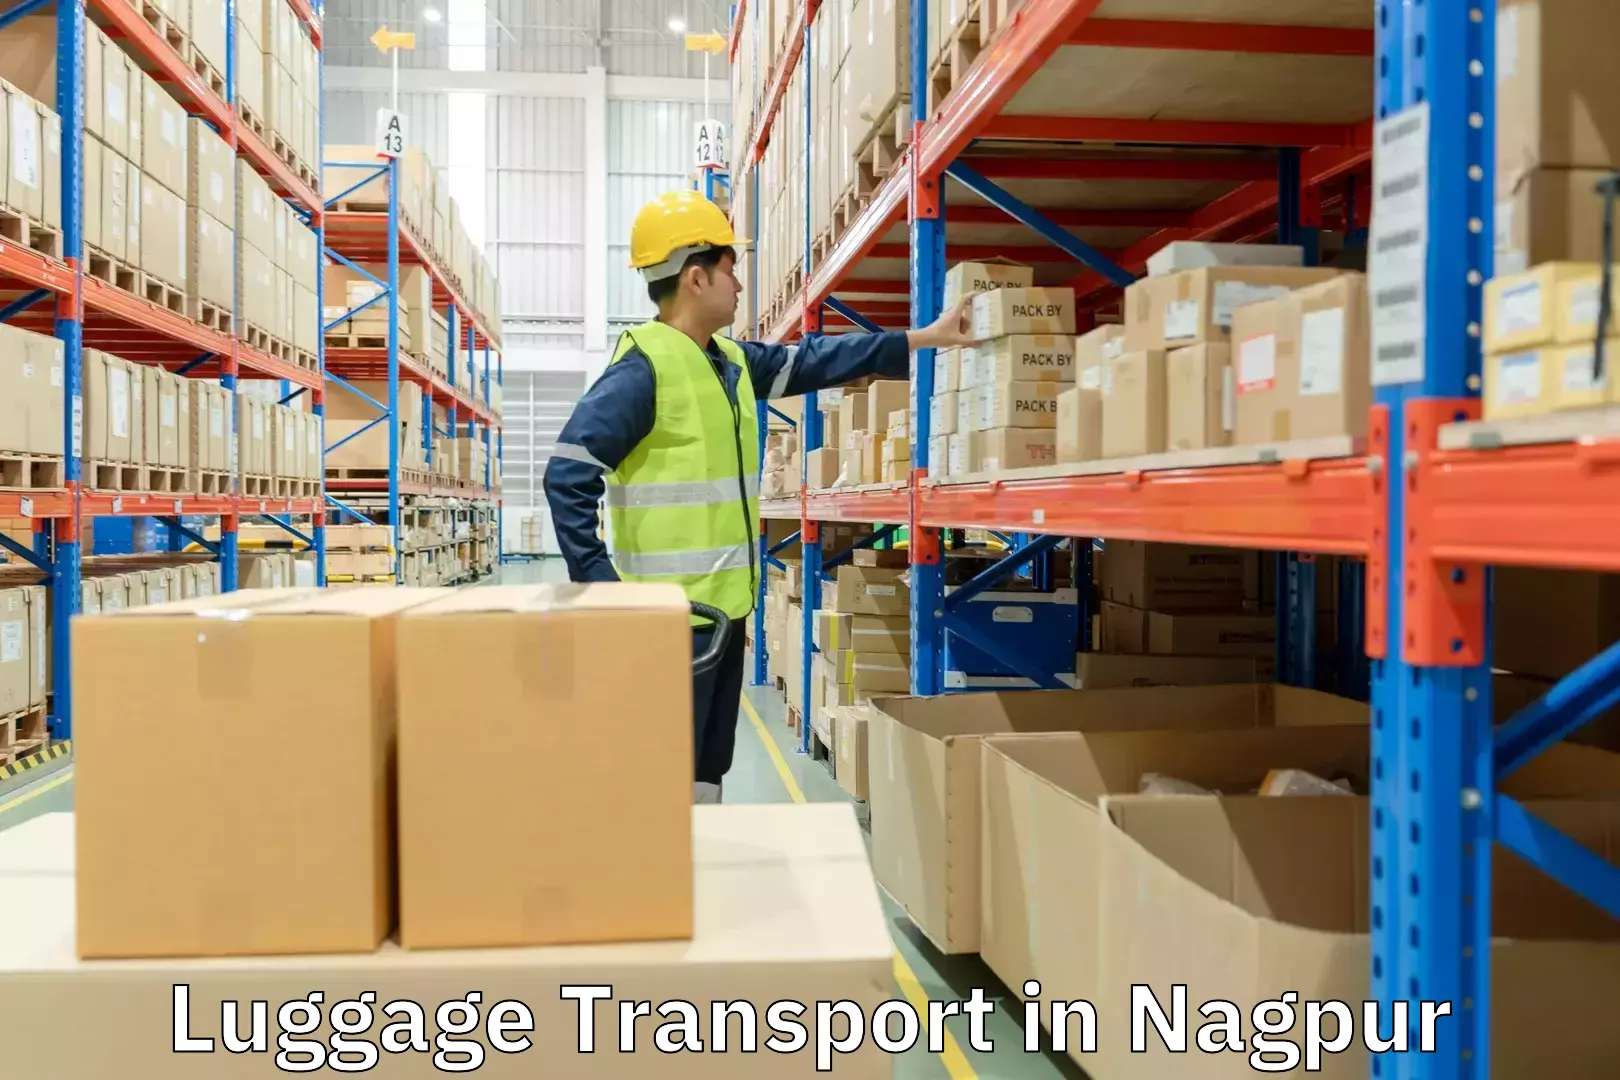 Baggage transport network in Nagpur